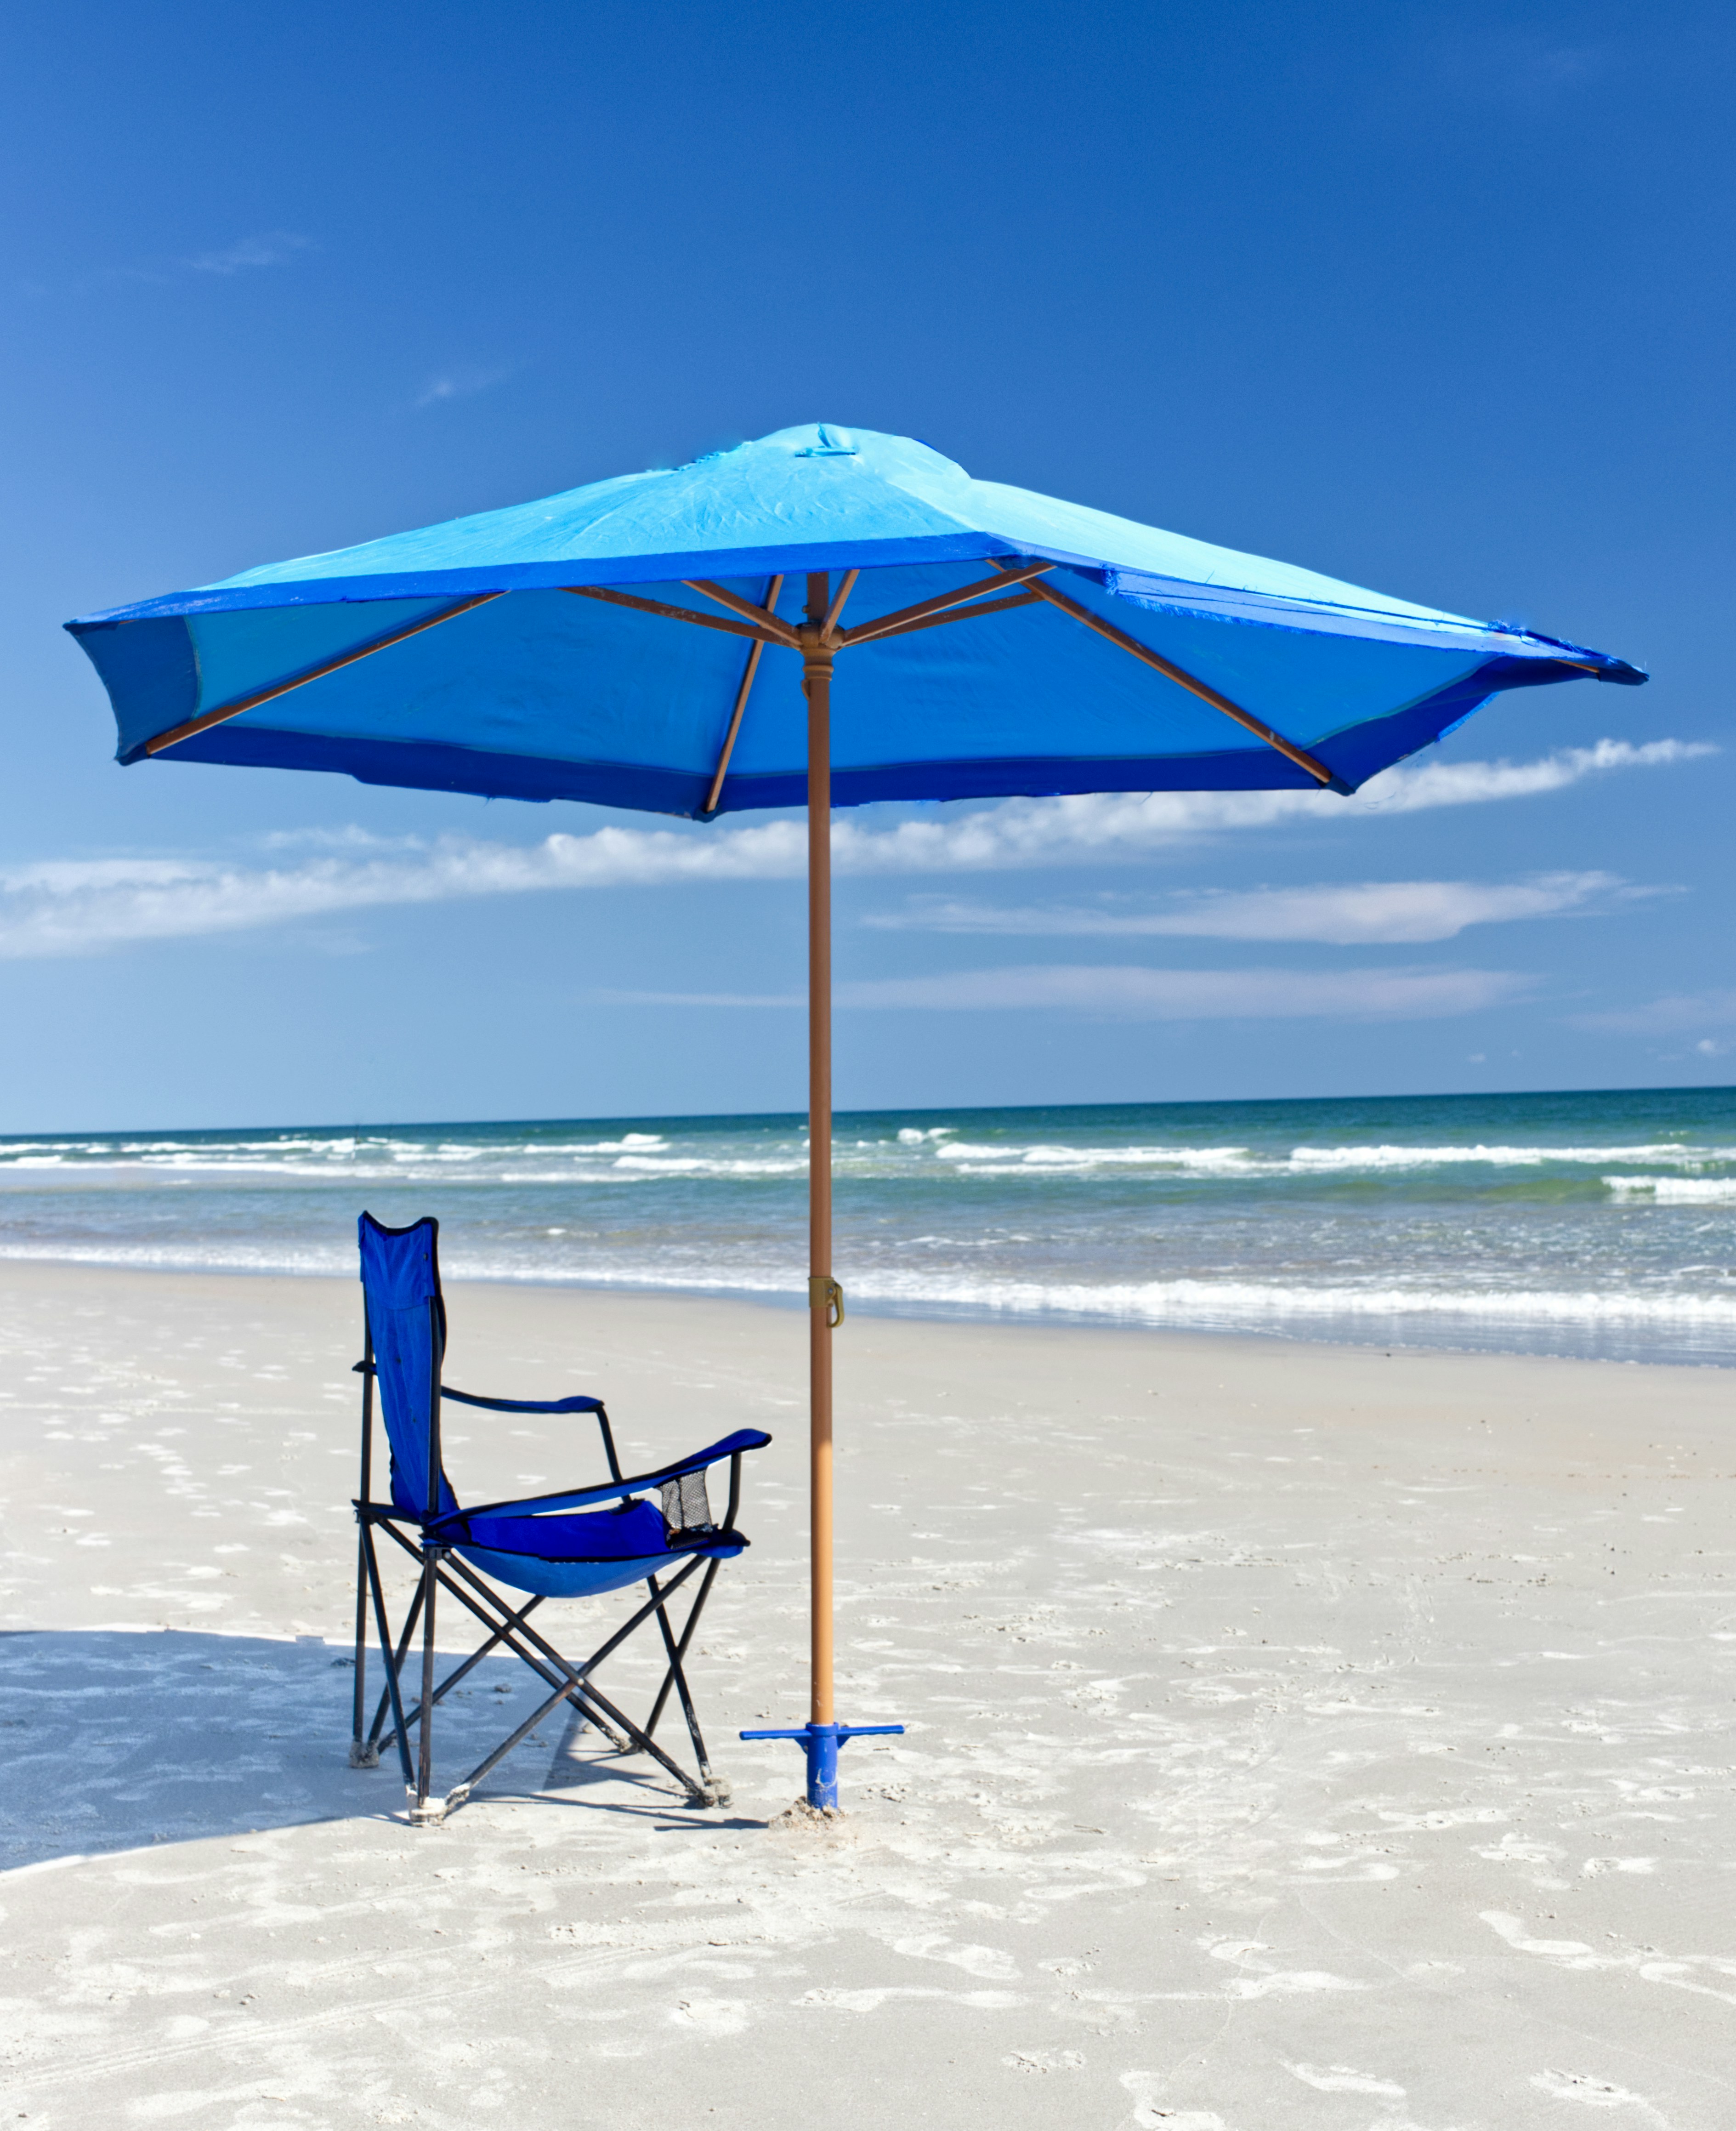 Blue umbrella on sunny beach.